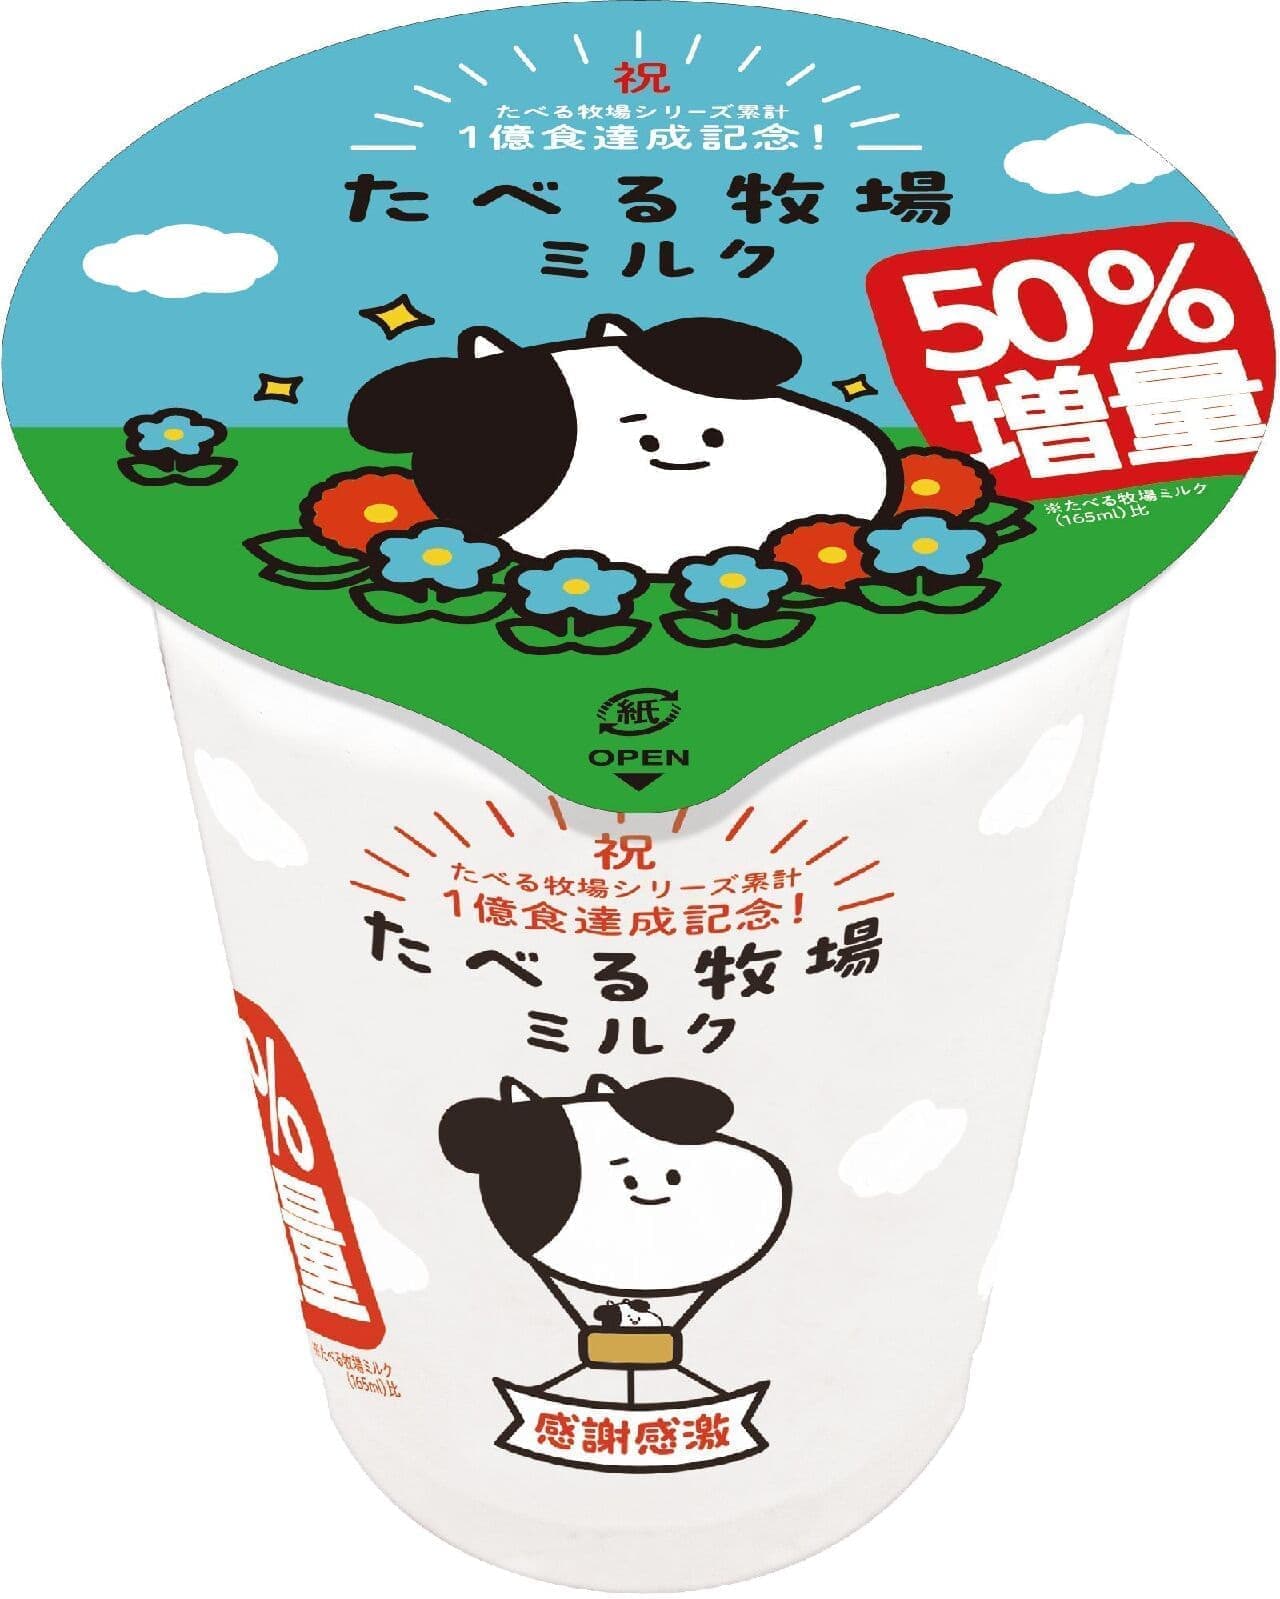 FamilyMart "TABERU Ranch Milk 50% more